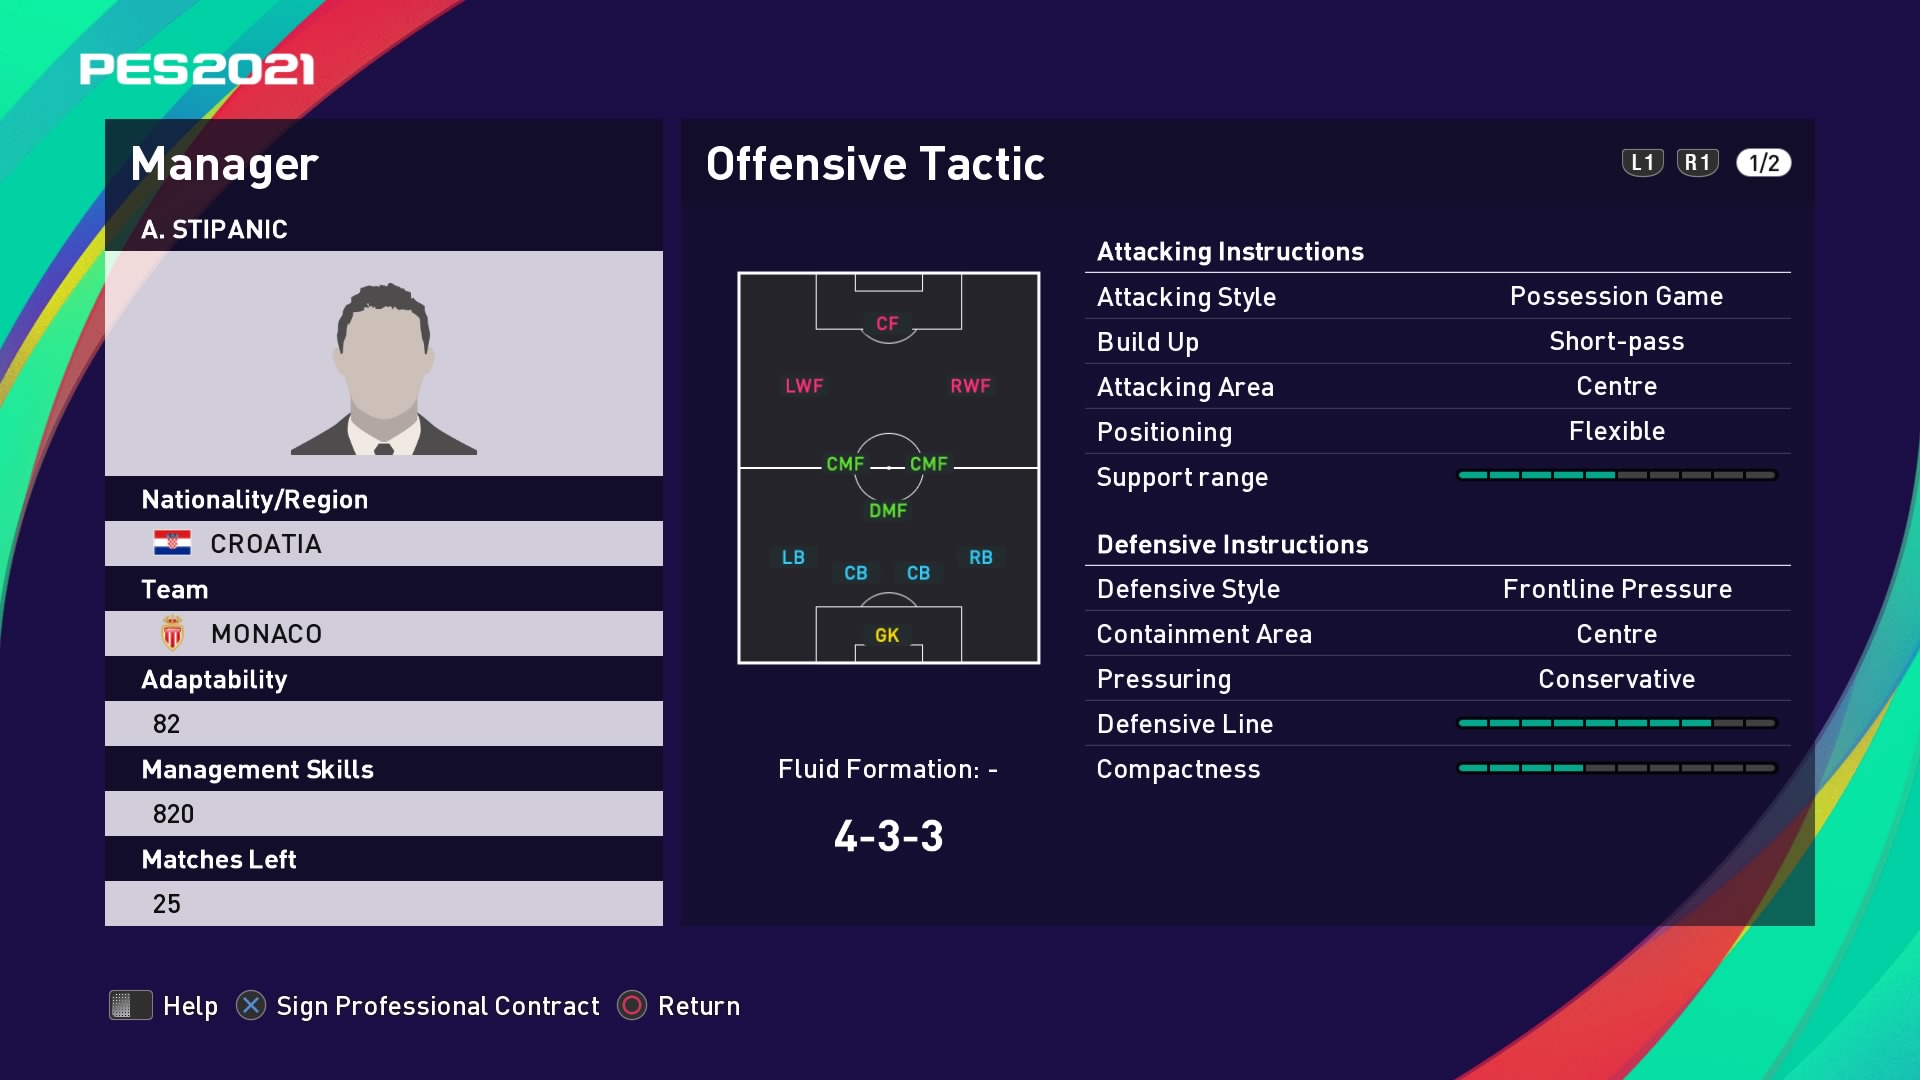 A. Stipanic (Niko Kovač) Offensive Tactic in PES 2021 myClub